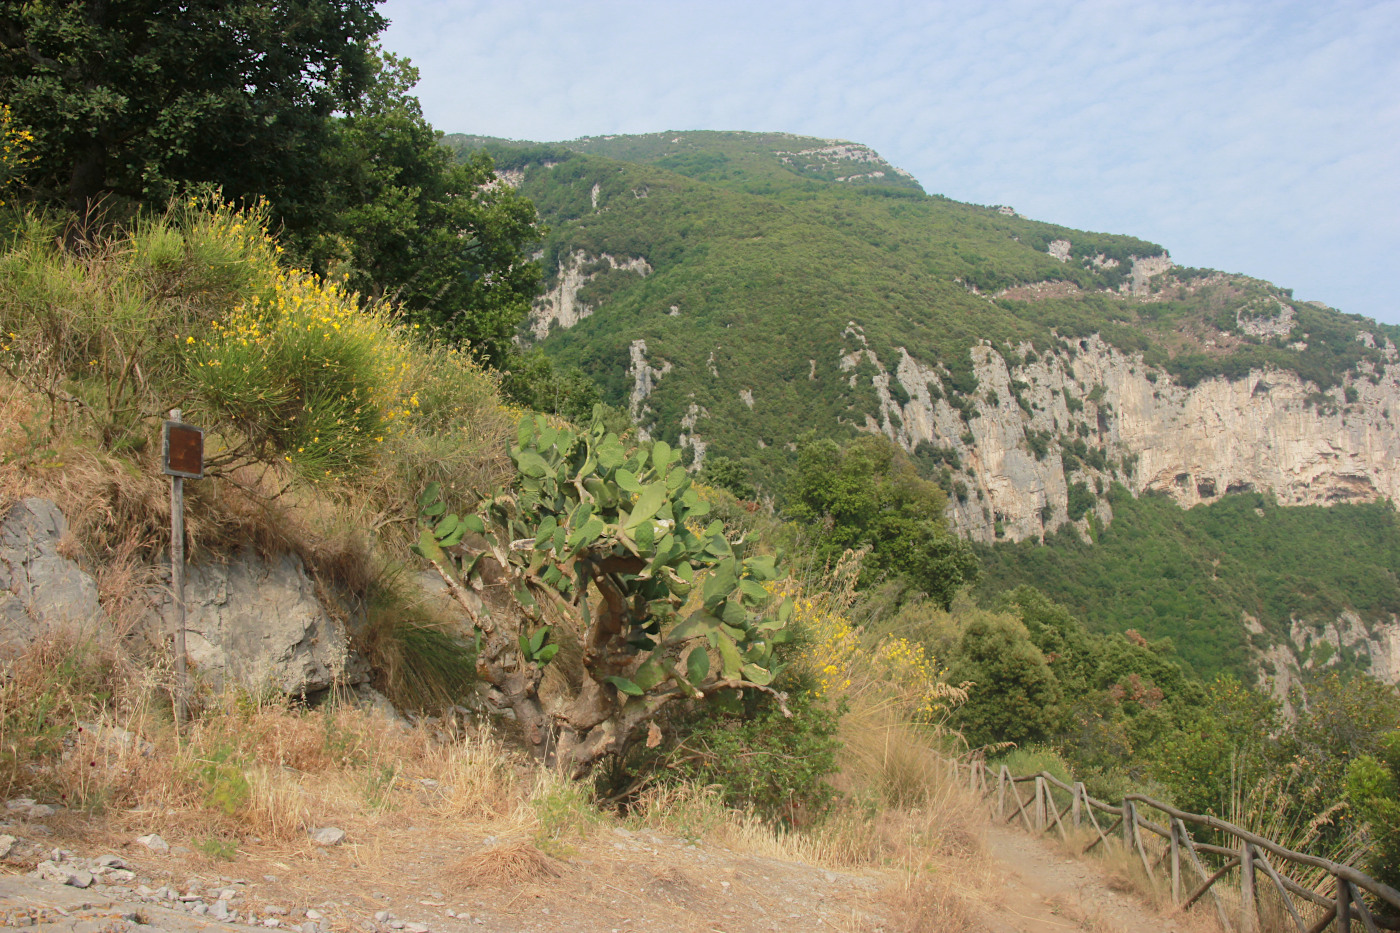 Тропа Богов. Sentieri degli Dei, изображение ландшафта.